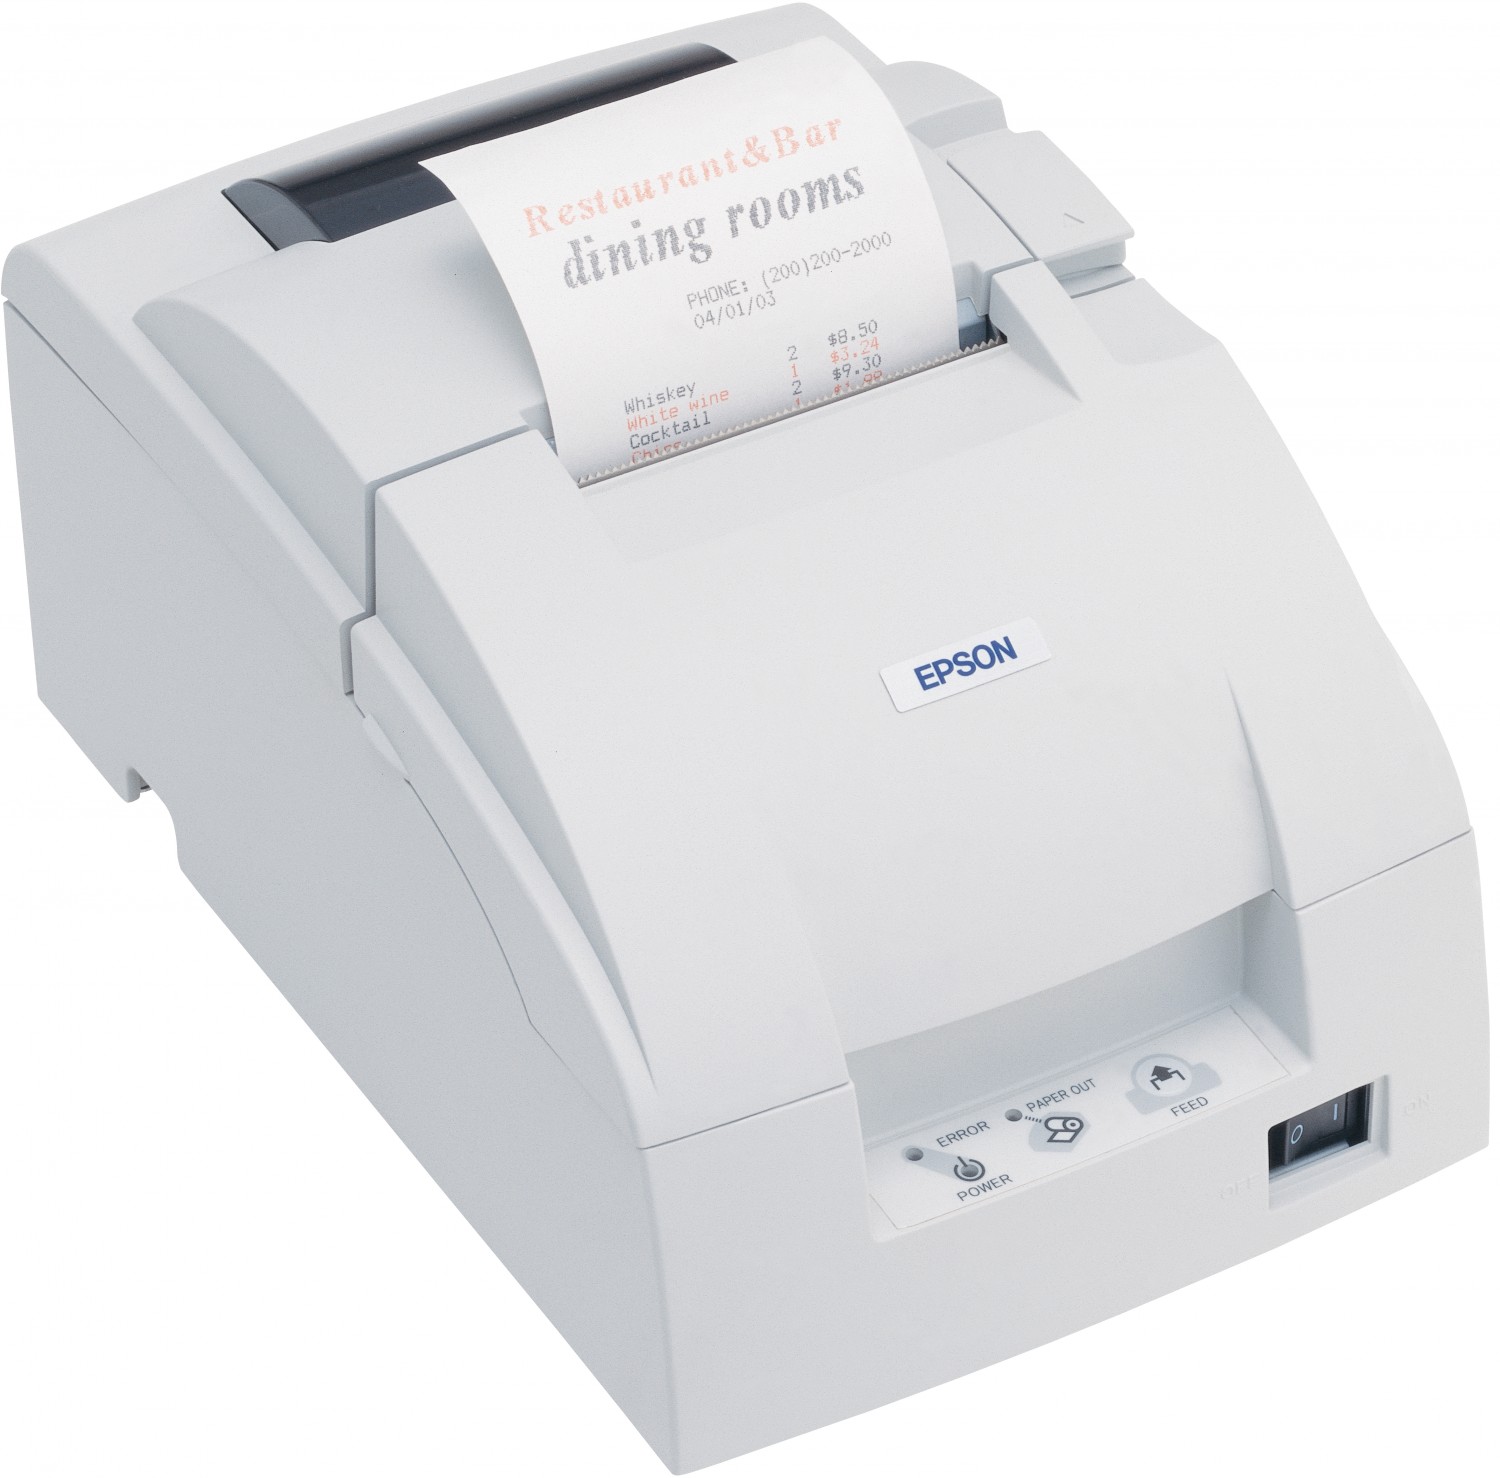  Epson  M188d Printer Driver  Windows 8 lasopatotal